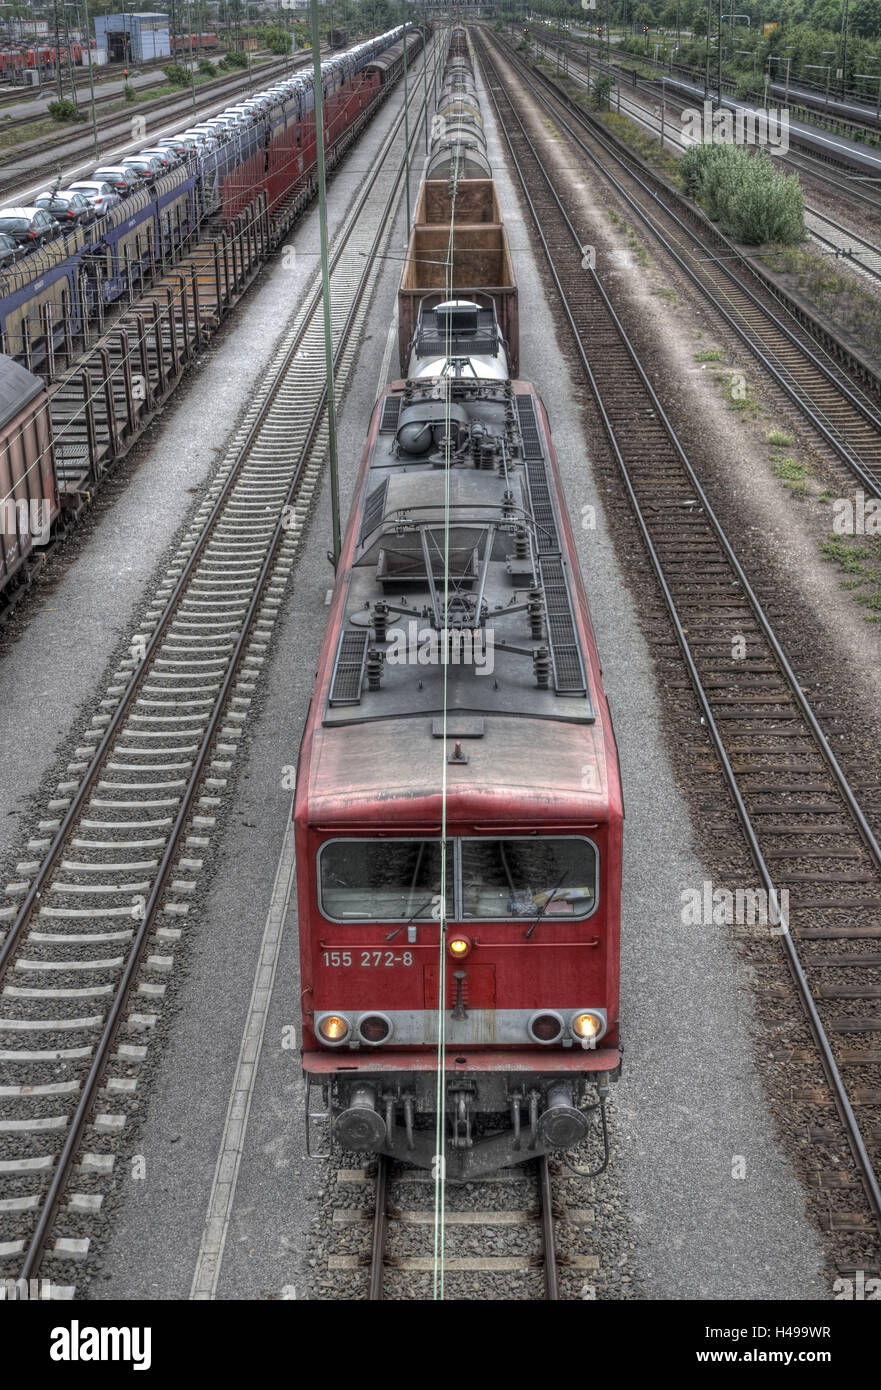 Freight train, tracks, Stock Photo